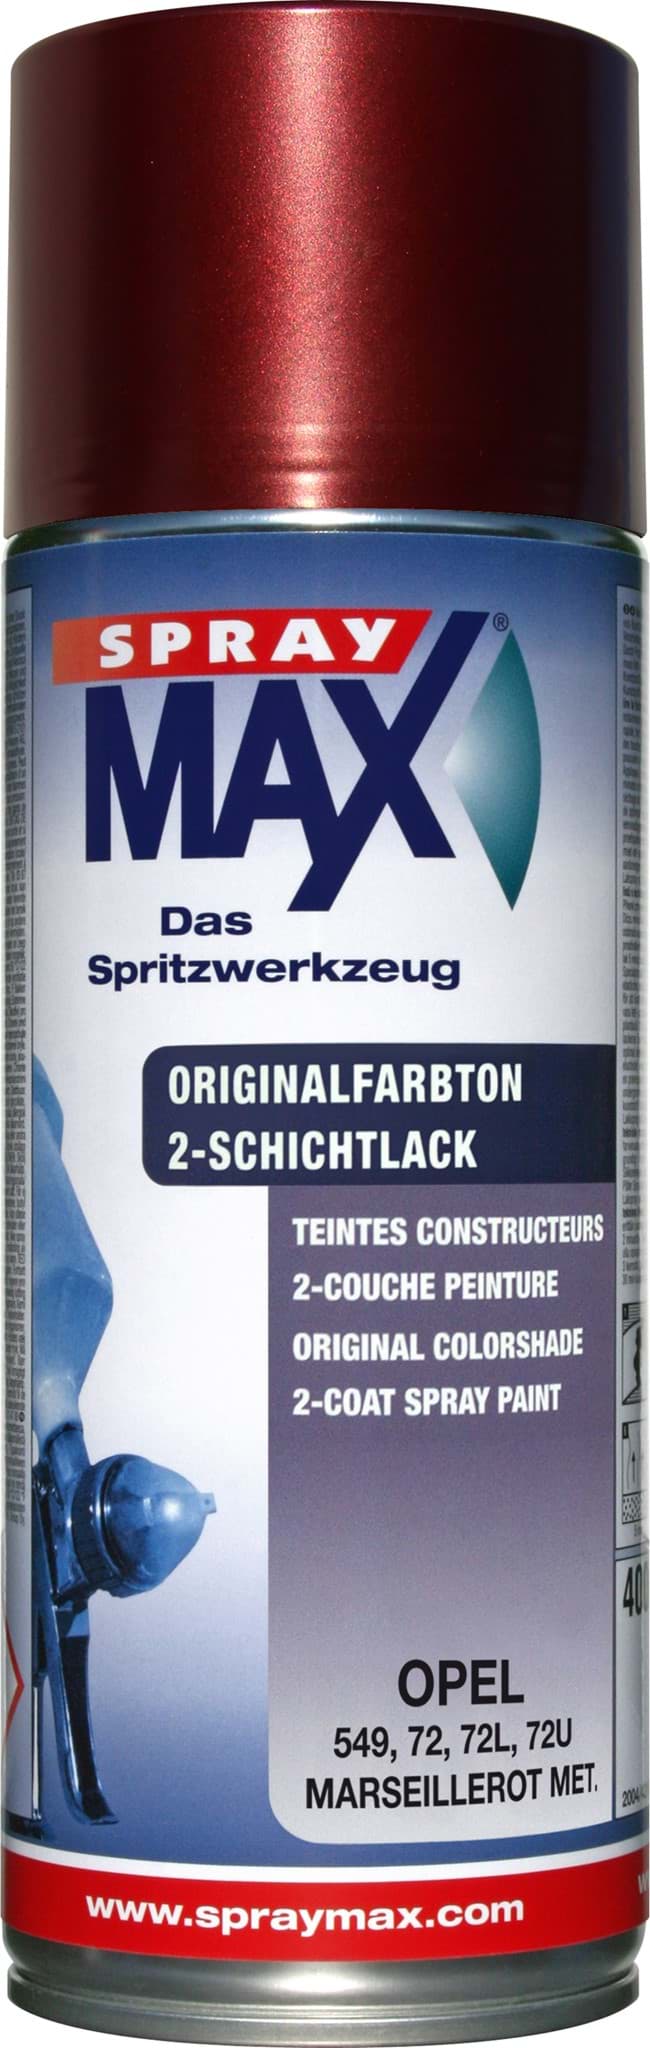 Изображение SprayMax Originalfarbton für Opel 549 marseillerot met.